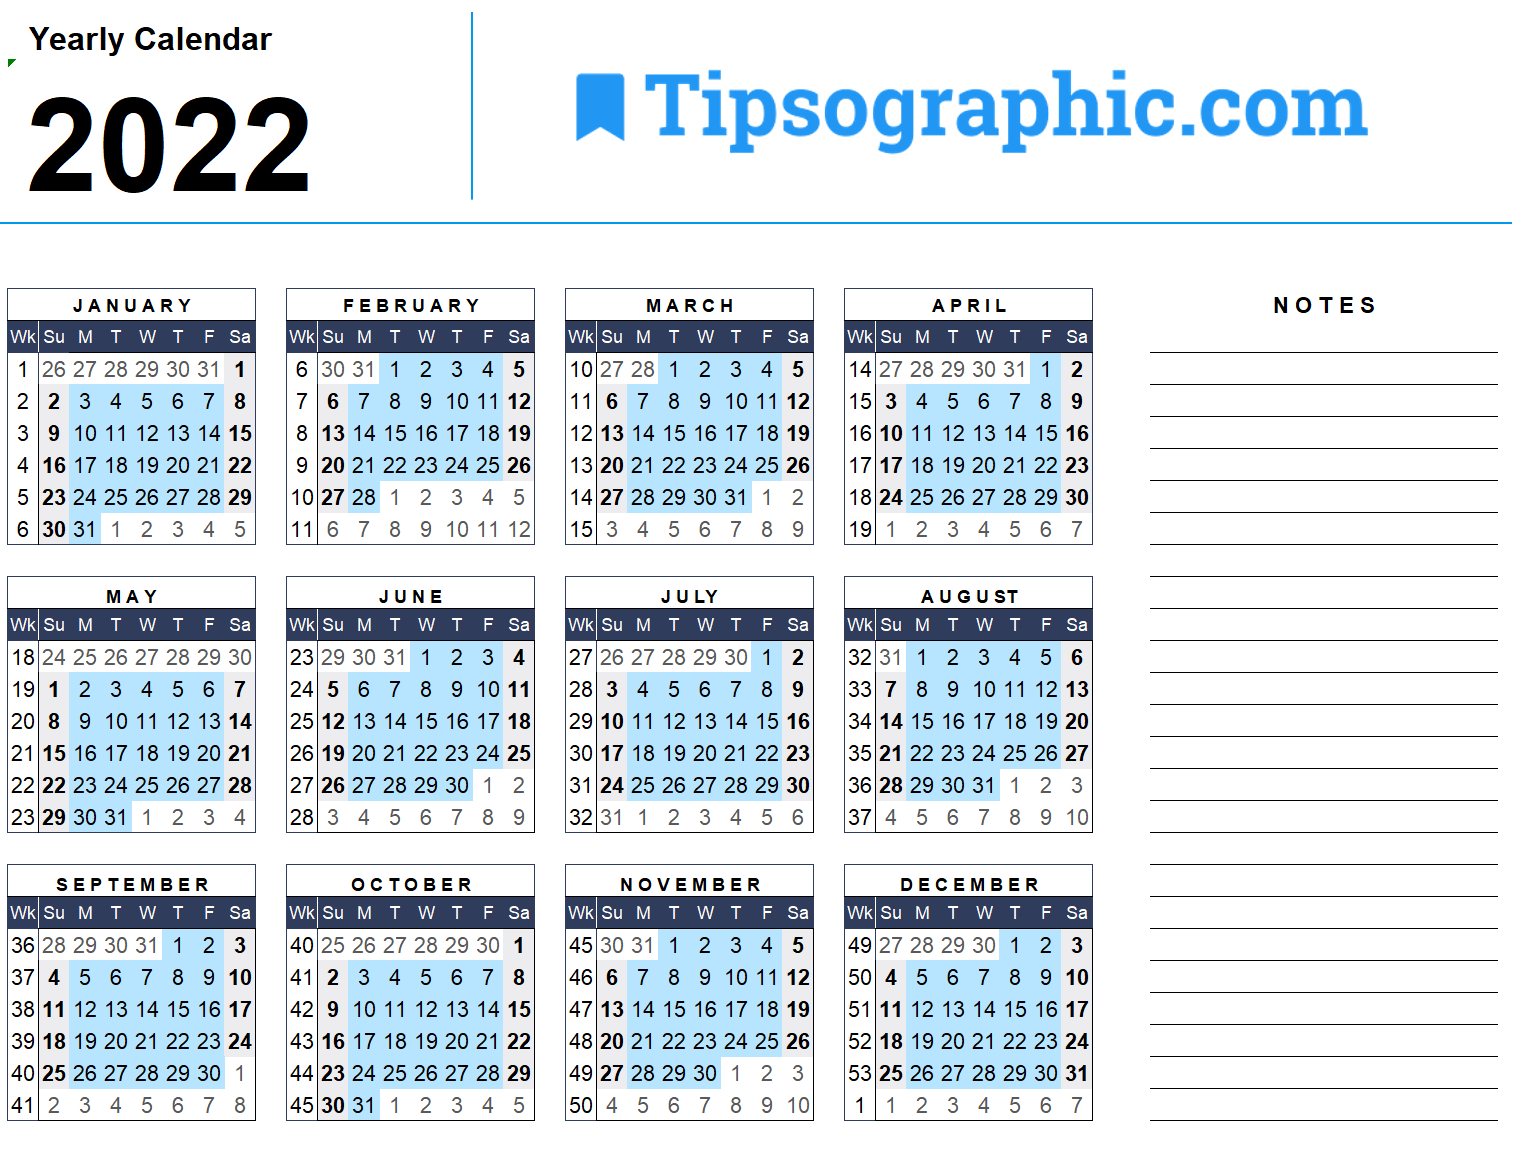 Download The 2021 Biweekly Payroll Calendar | Tipsographic-2021 Biweekly Payroll Calendar